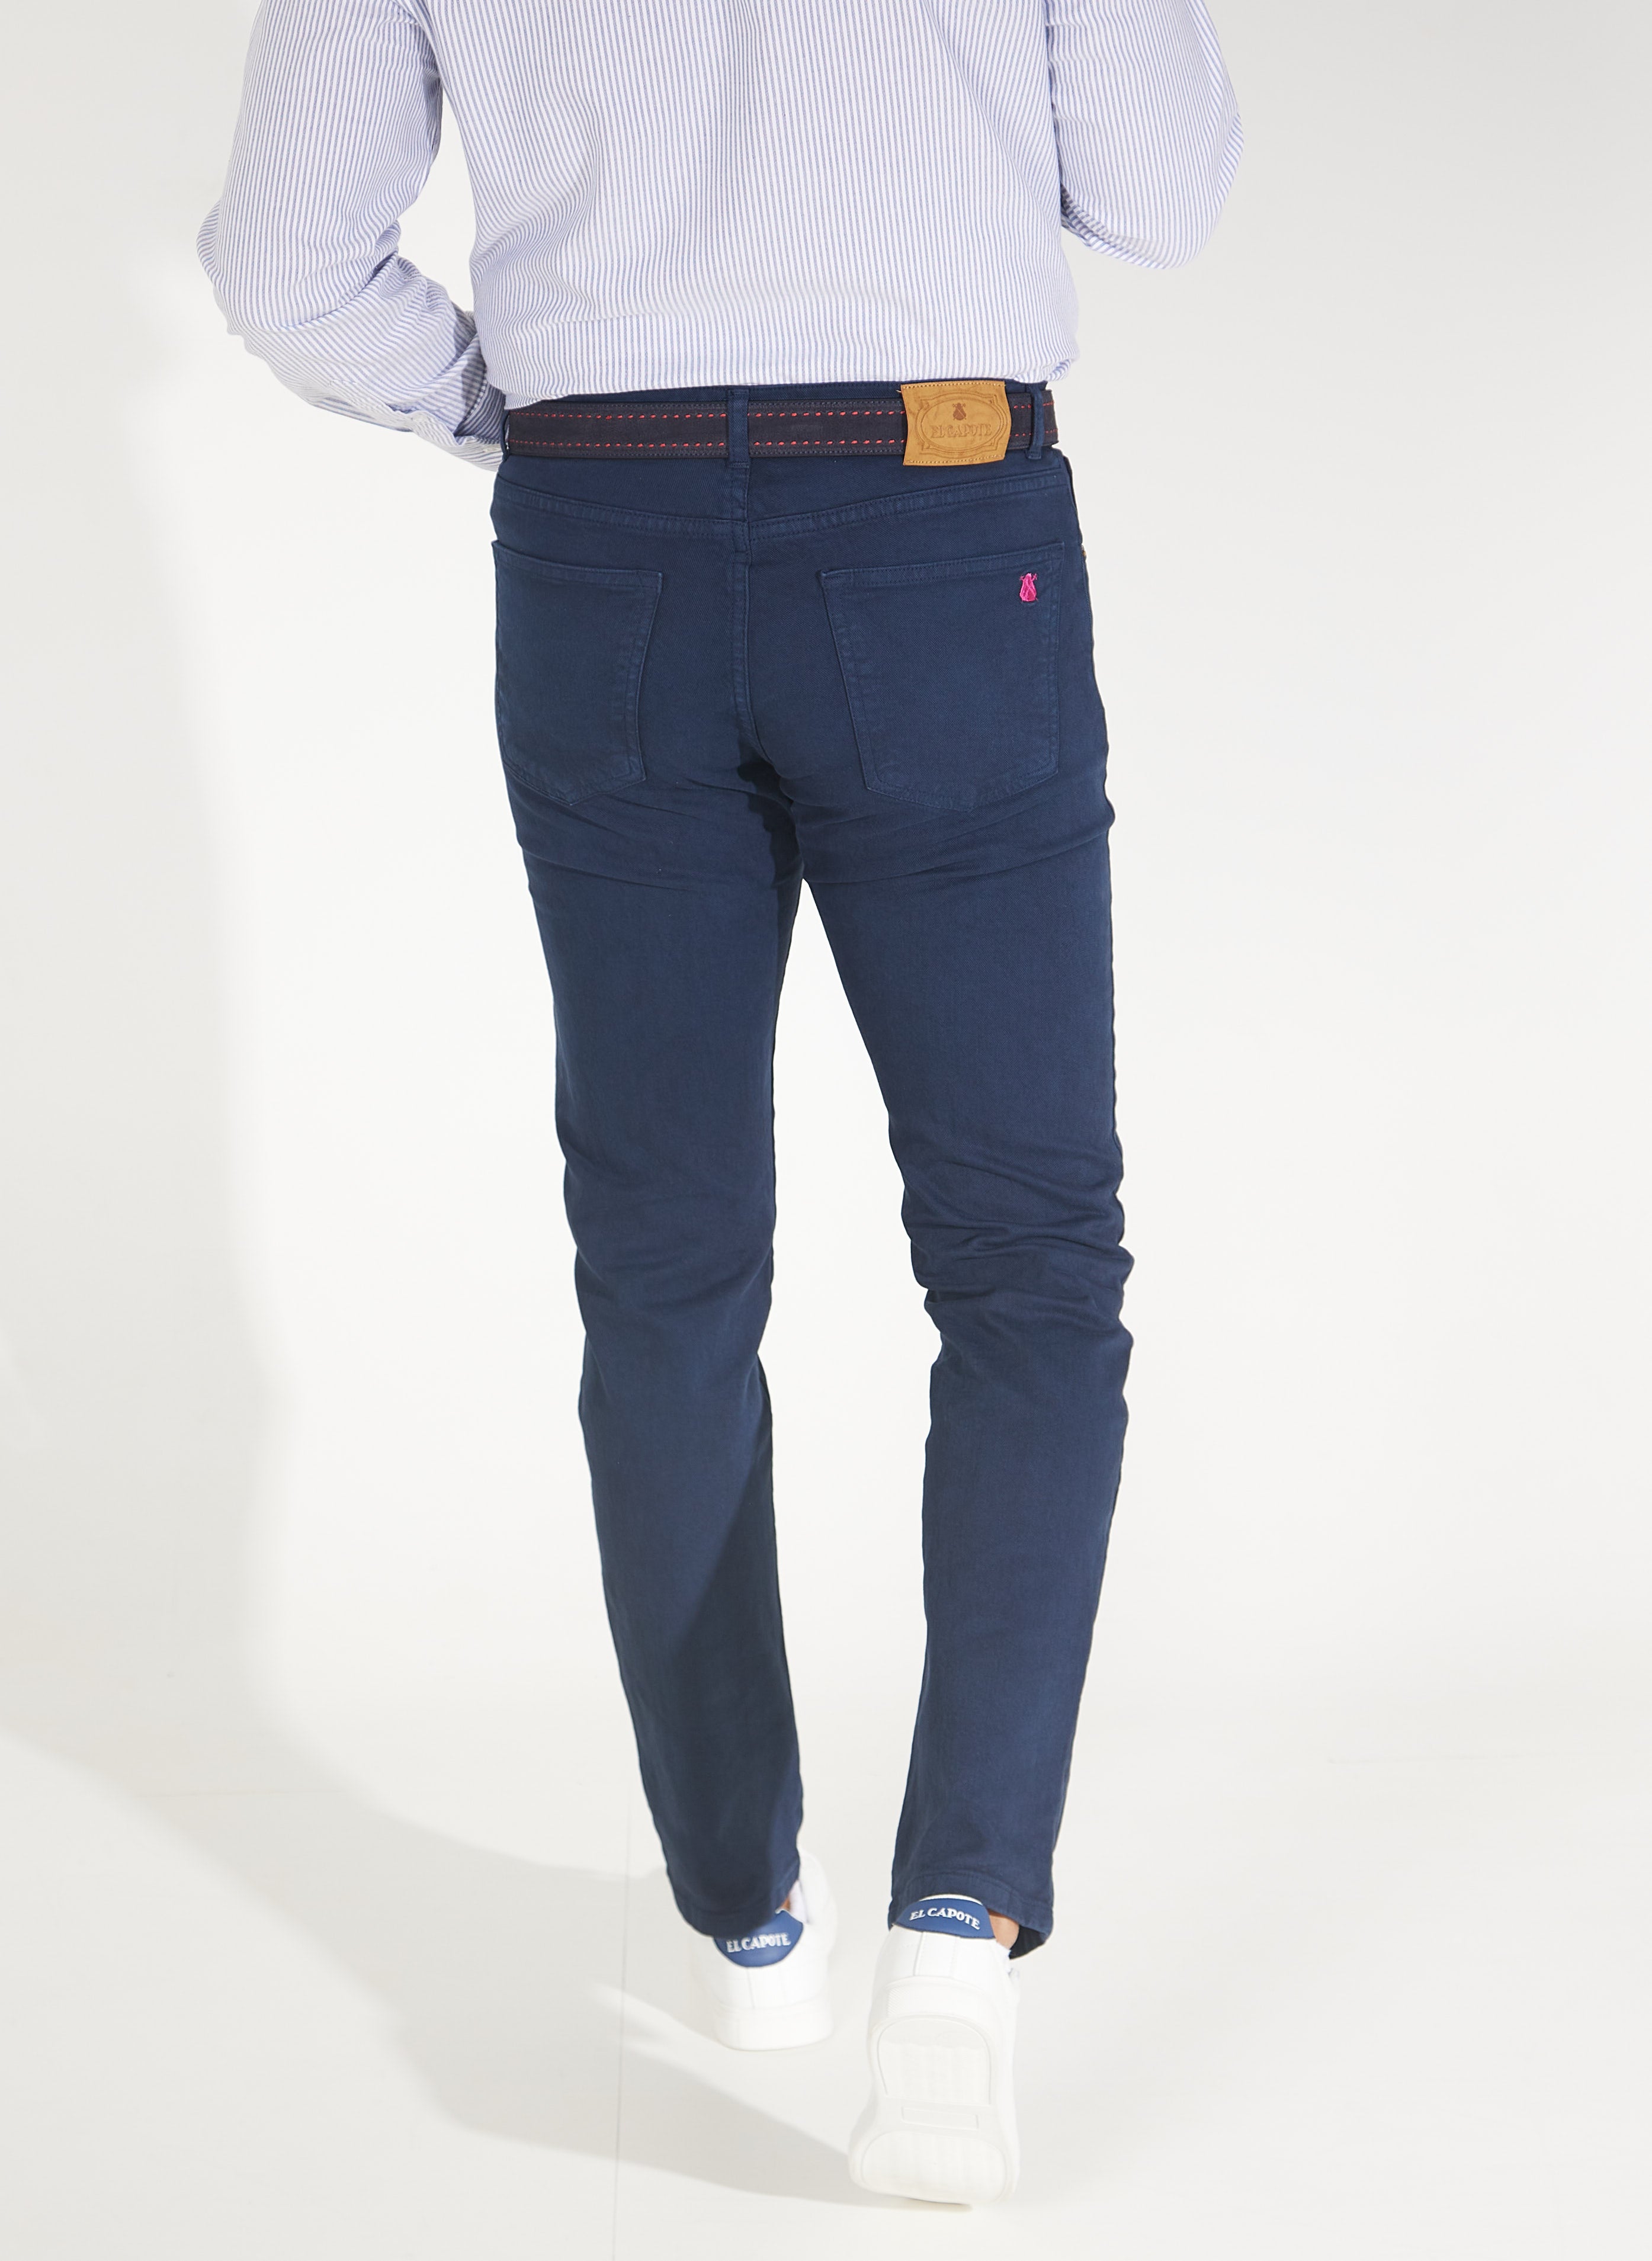 Pantalon bleu 5 poches homme